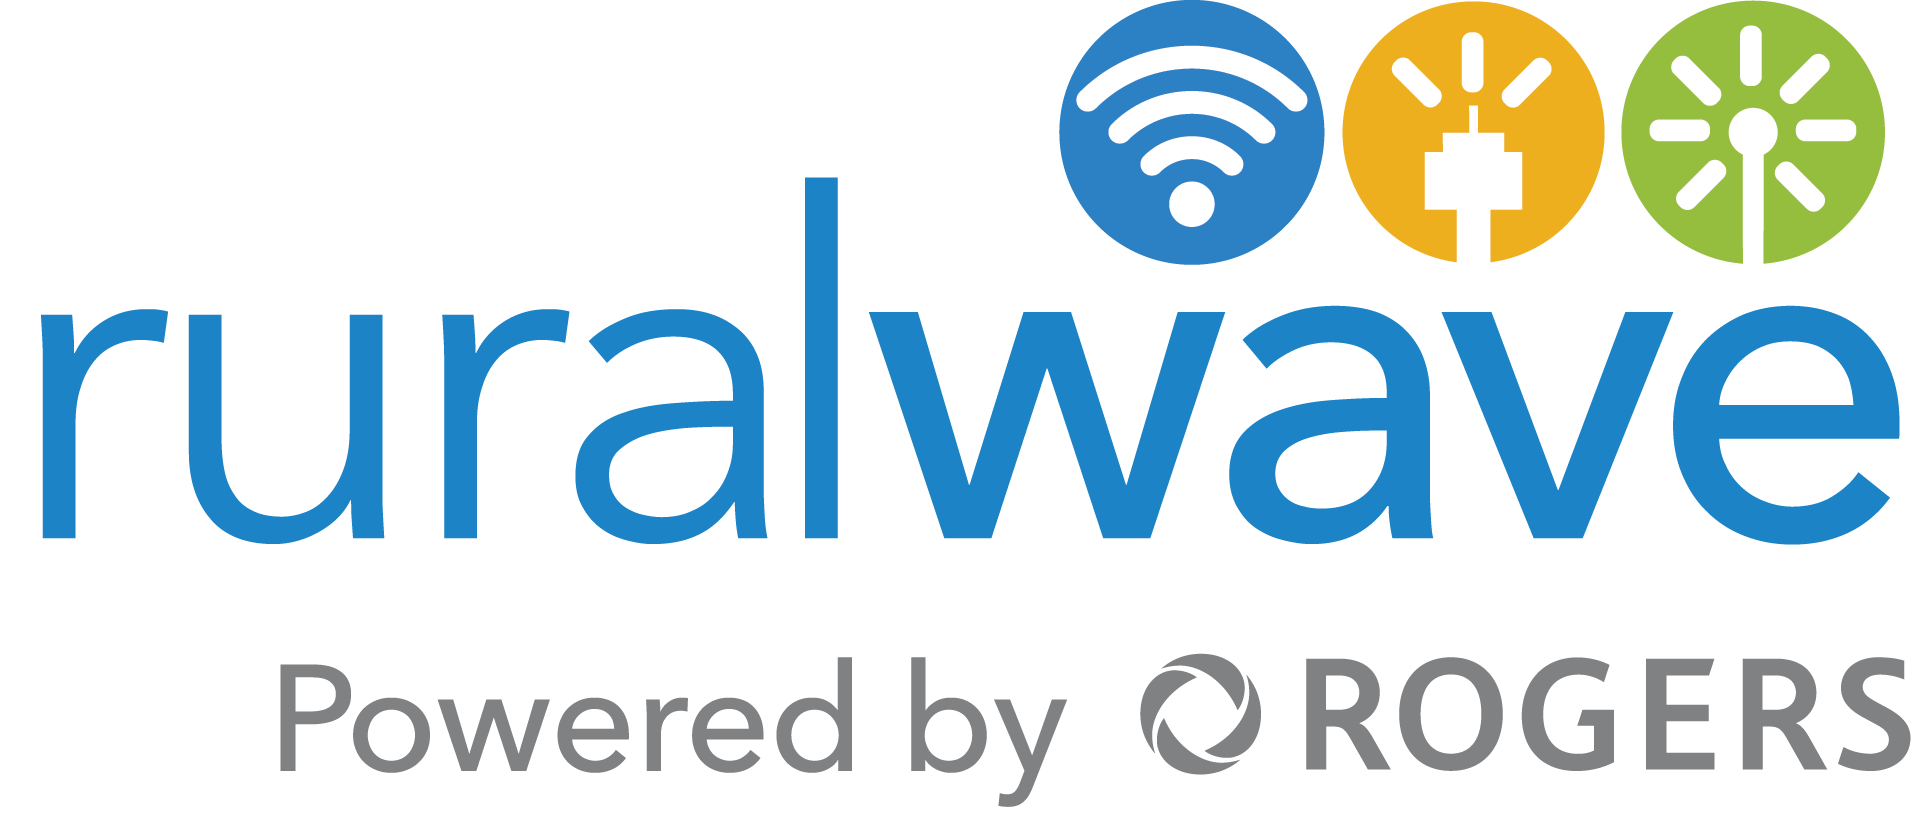 Rural wave Logo